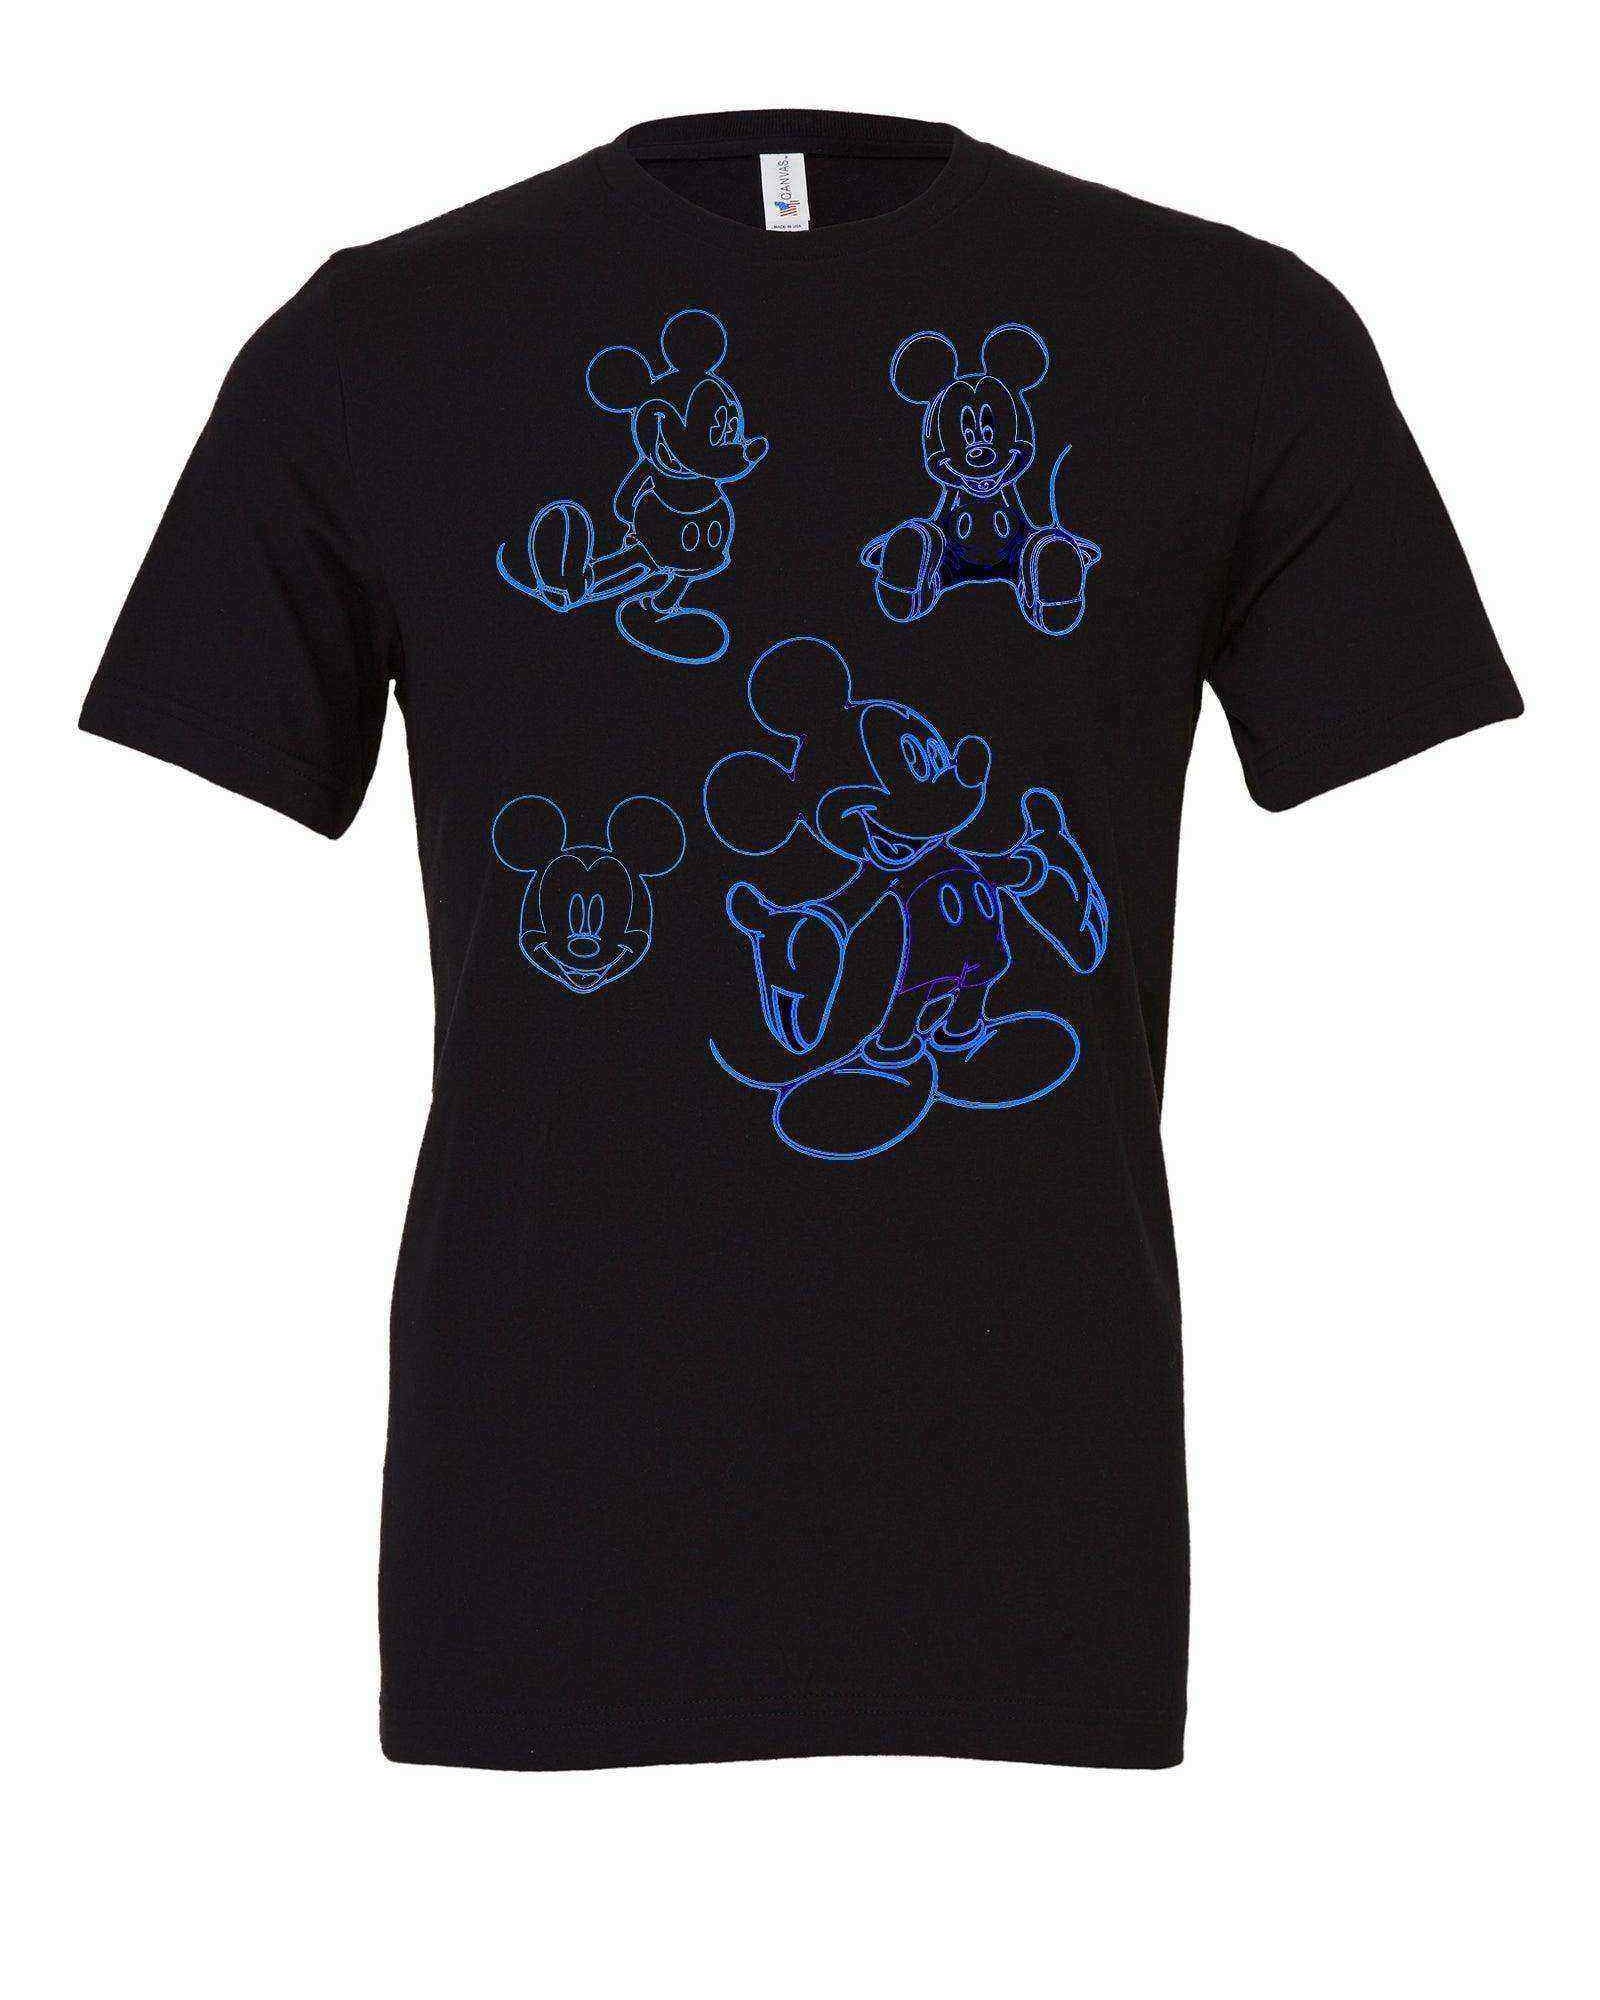 Womens | Blue Neon Mickey Shirt | Tron Mickey Shirt | Tomorrowland Mickeys Shirt - Dylan's Tees